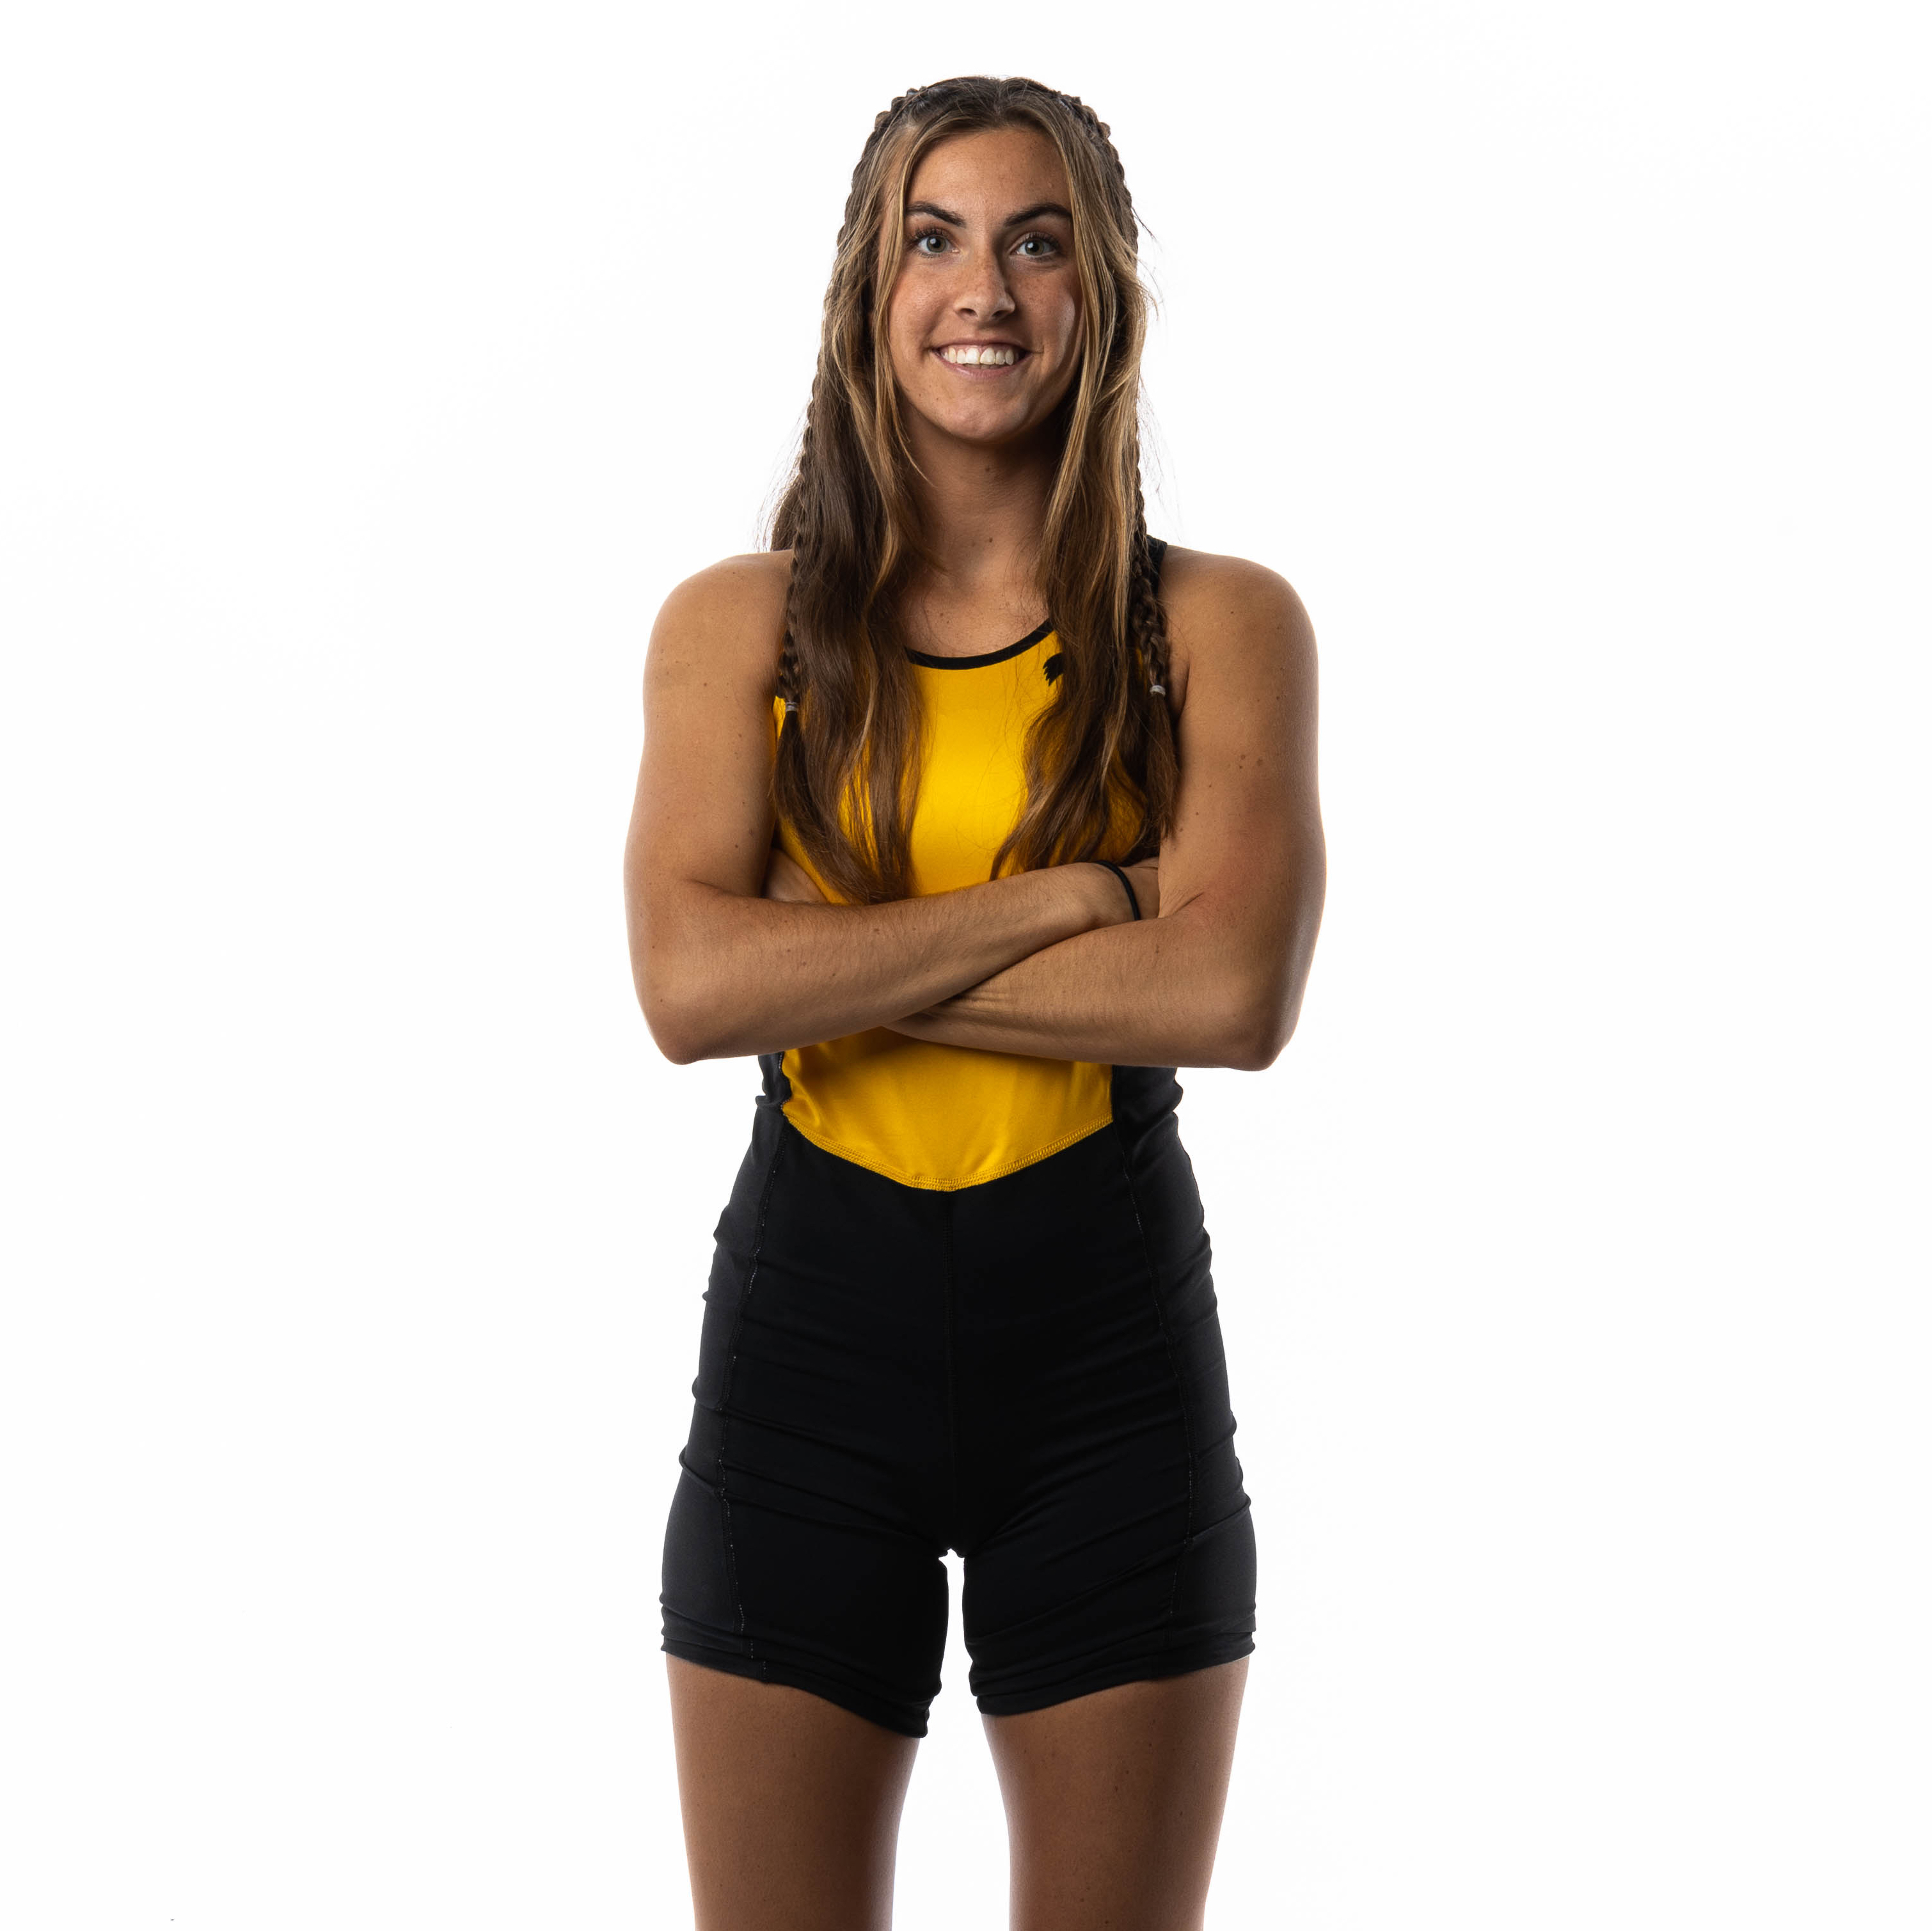 Mackenzie Streveler athlete profile head shot